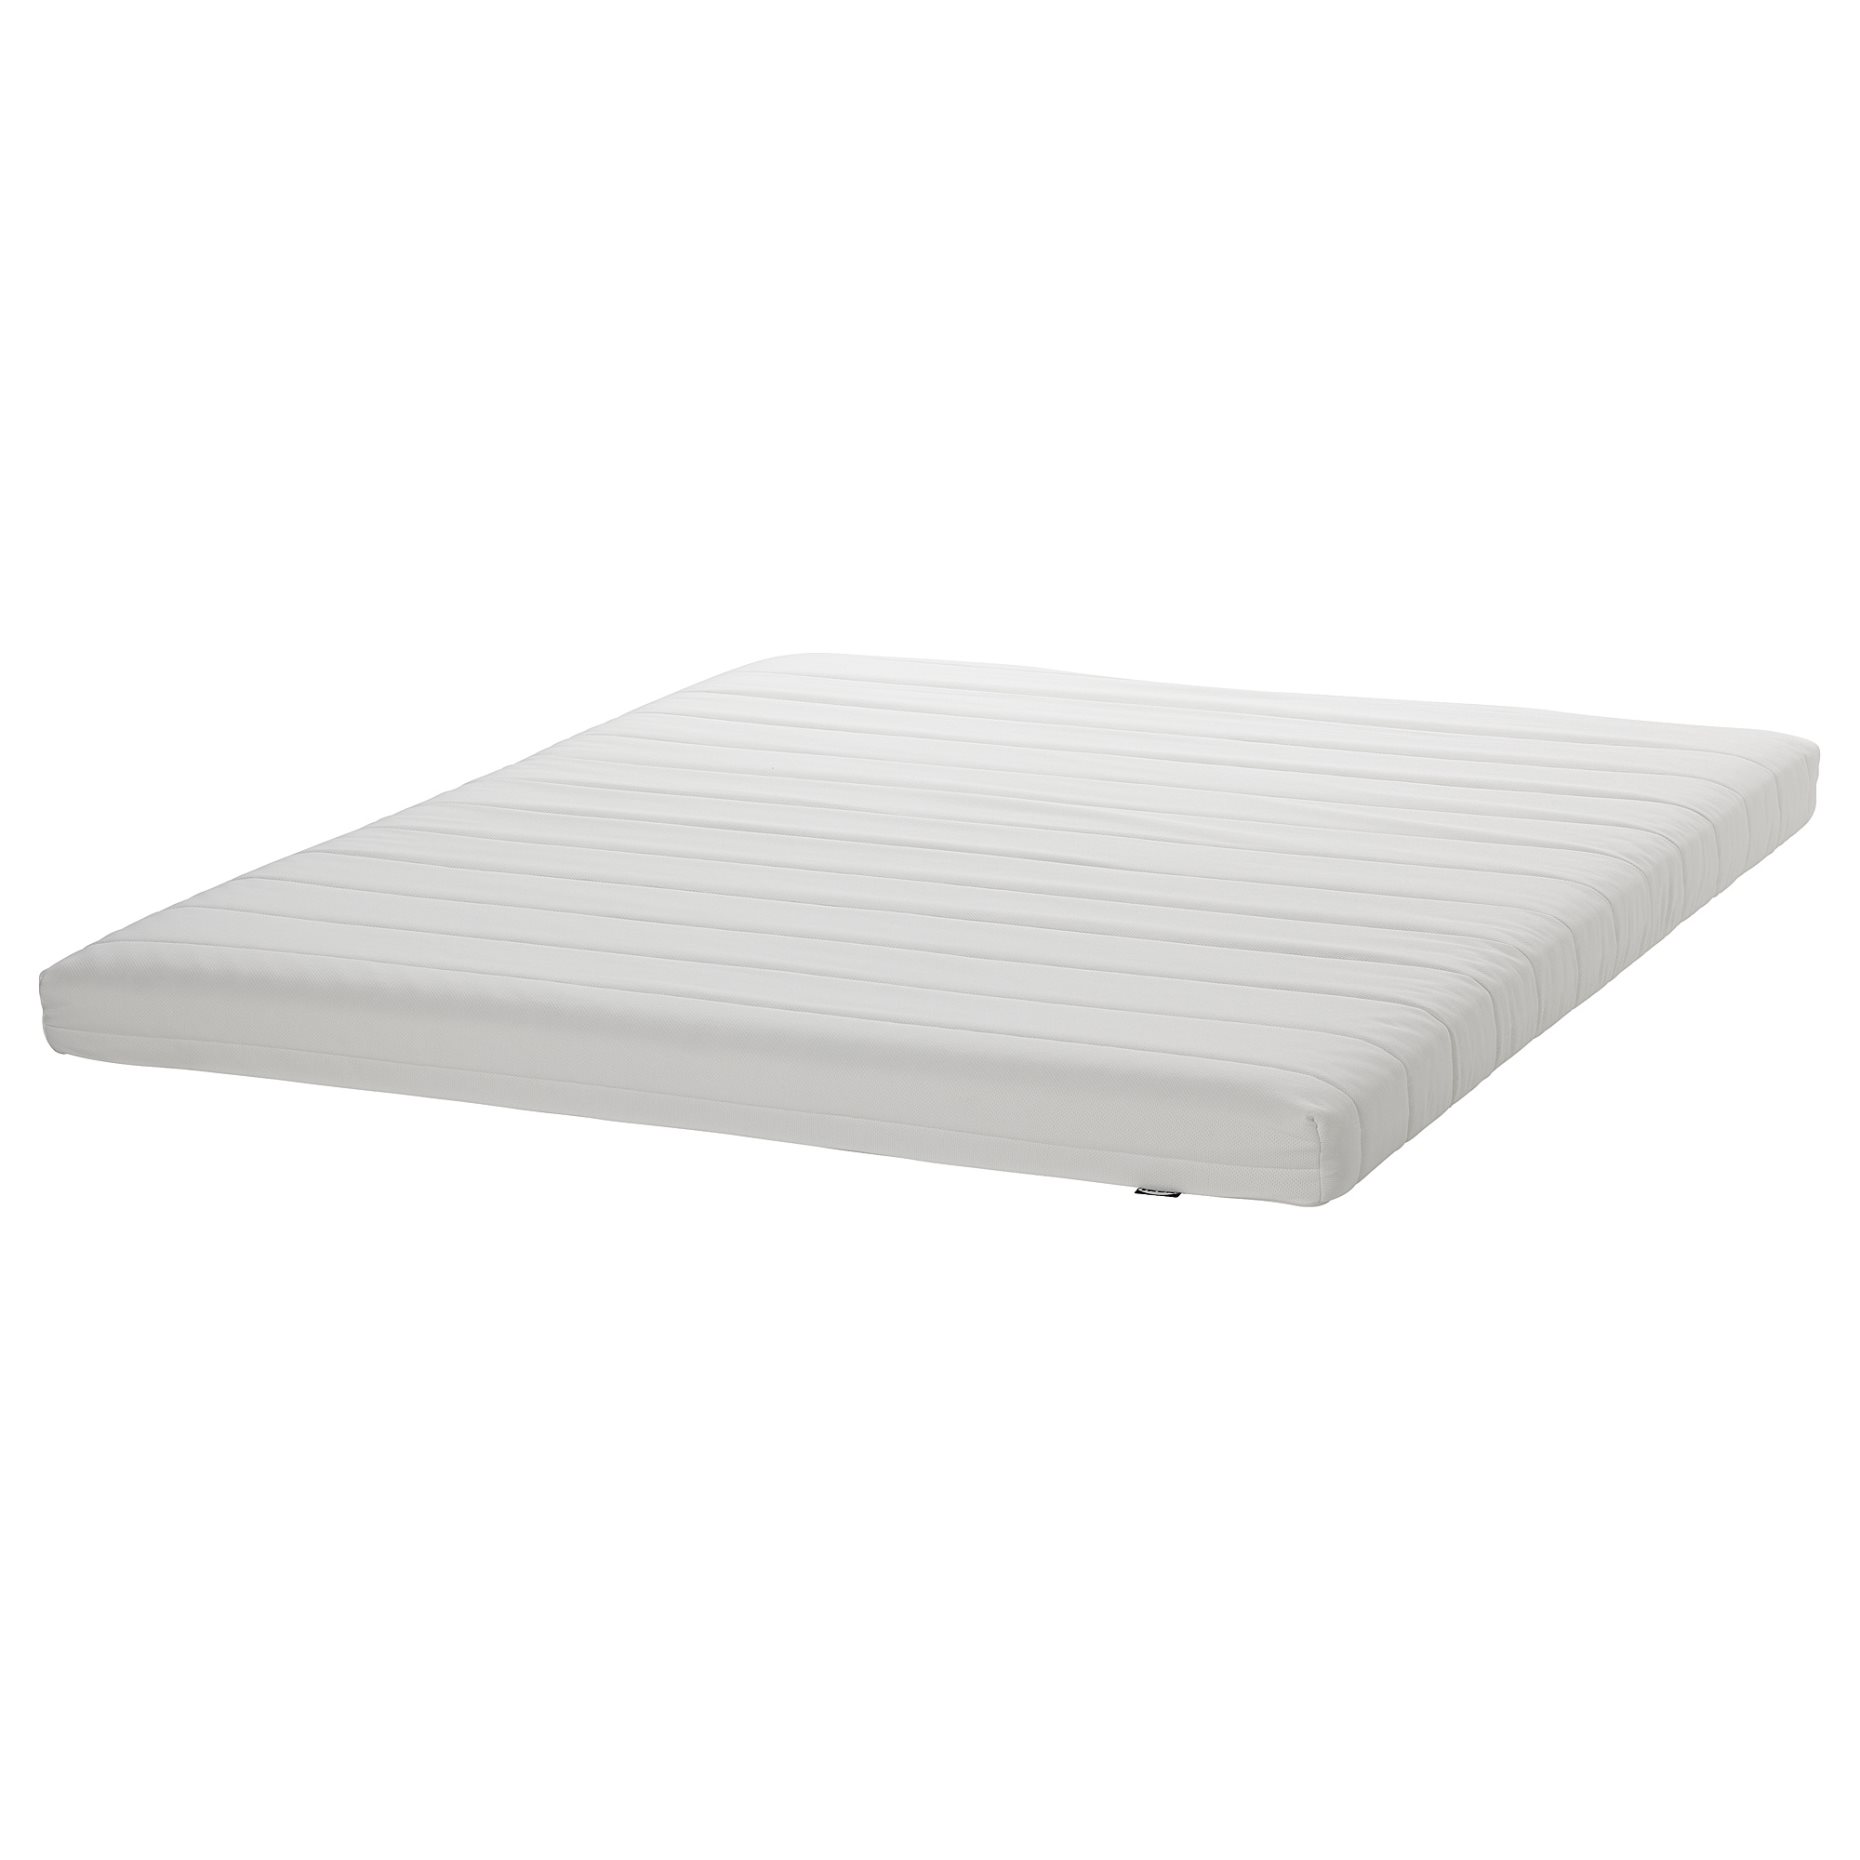 ÅFJÄLL, foam mattress/medium firm, 120x200 cm, 305.699.48